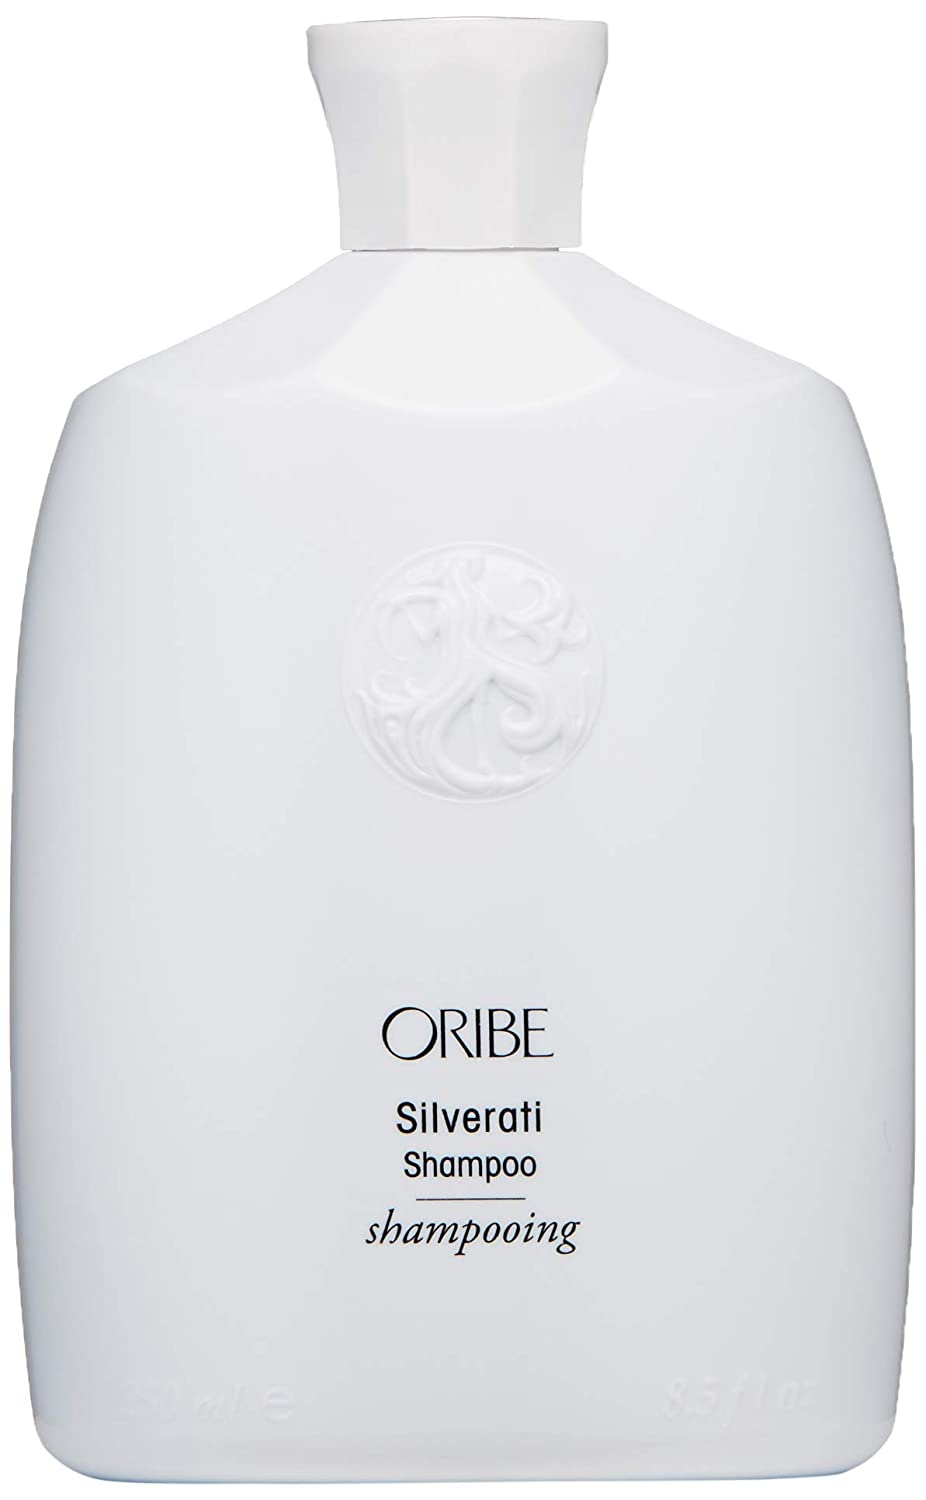  7. ORIBE Silverati Shampoo is ideal for silver hair. 